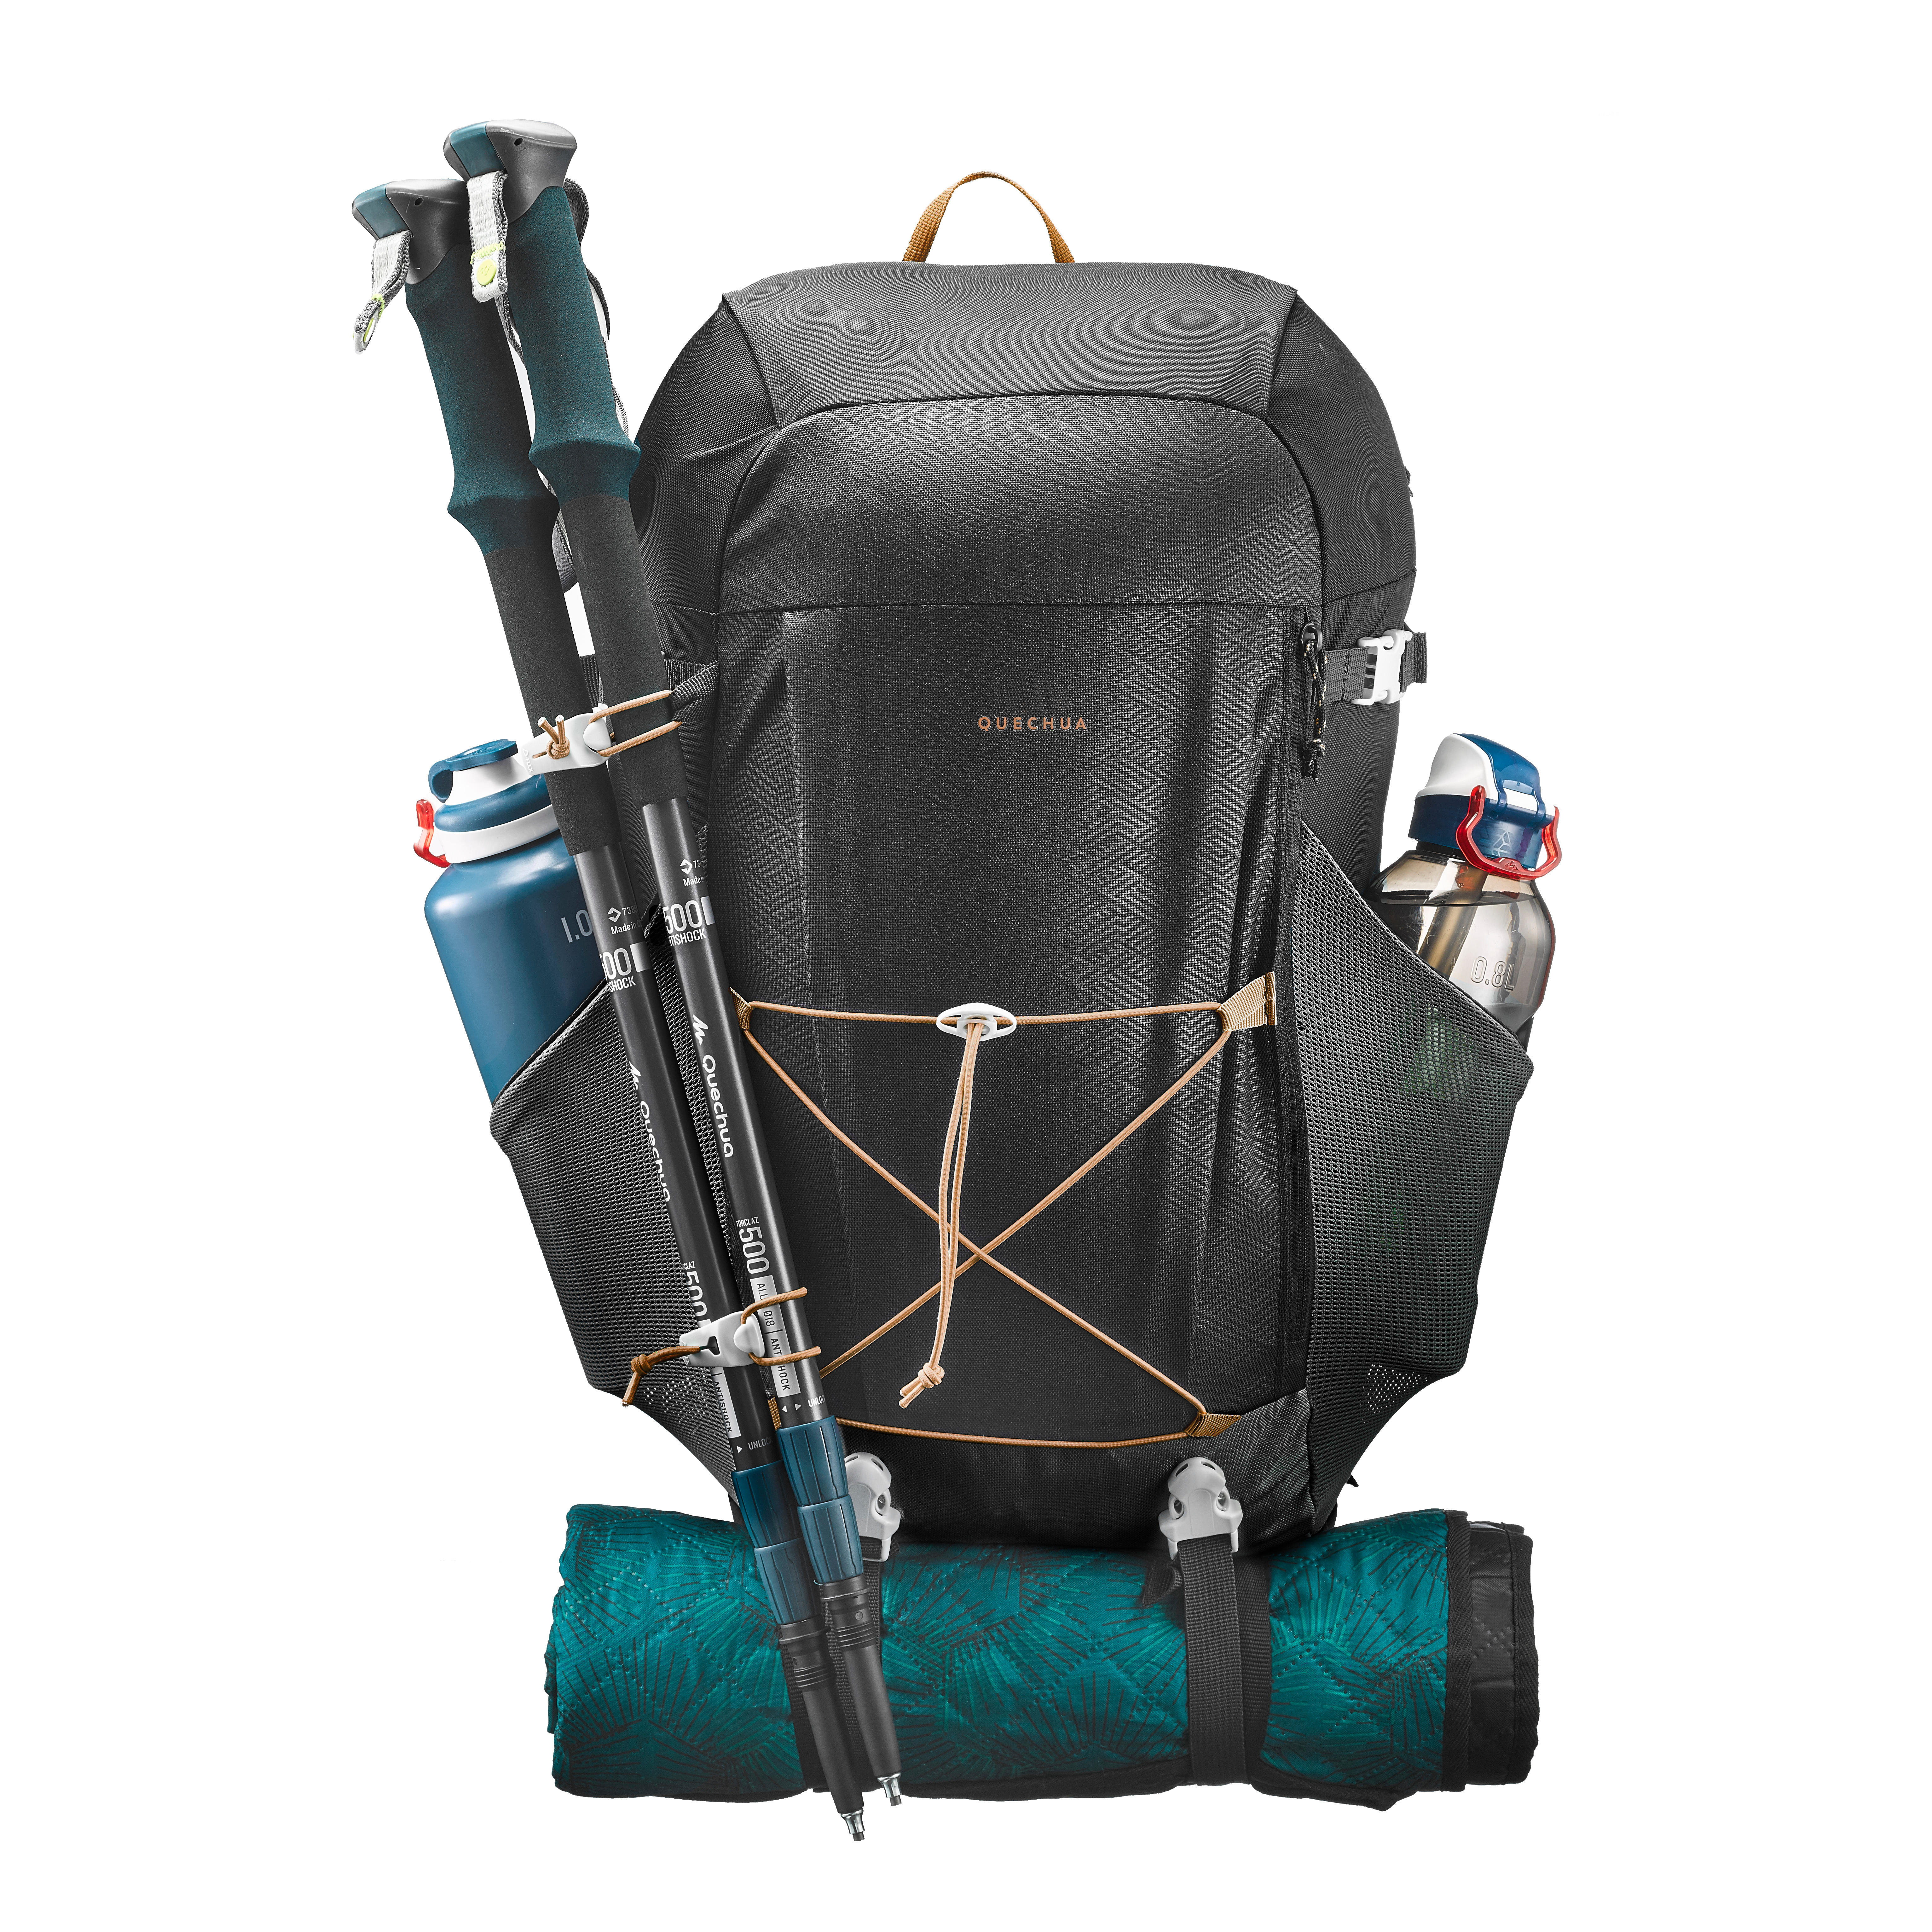 NH100 30 L Hiking Backpack - Decathlon